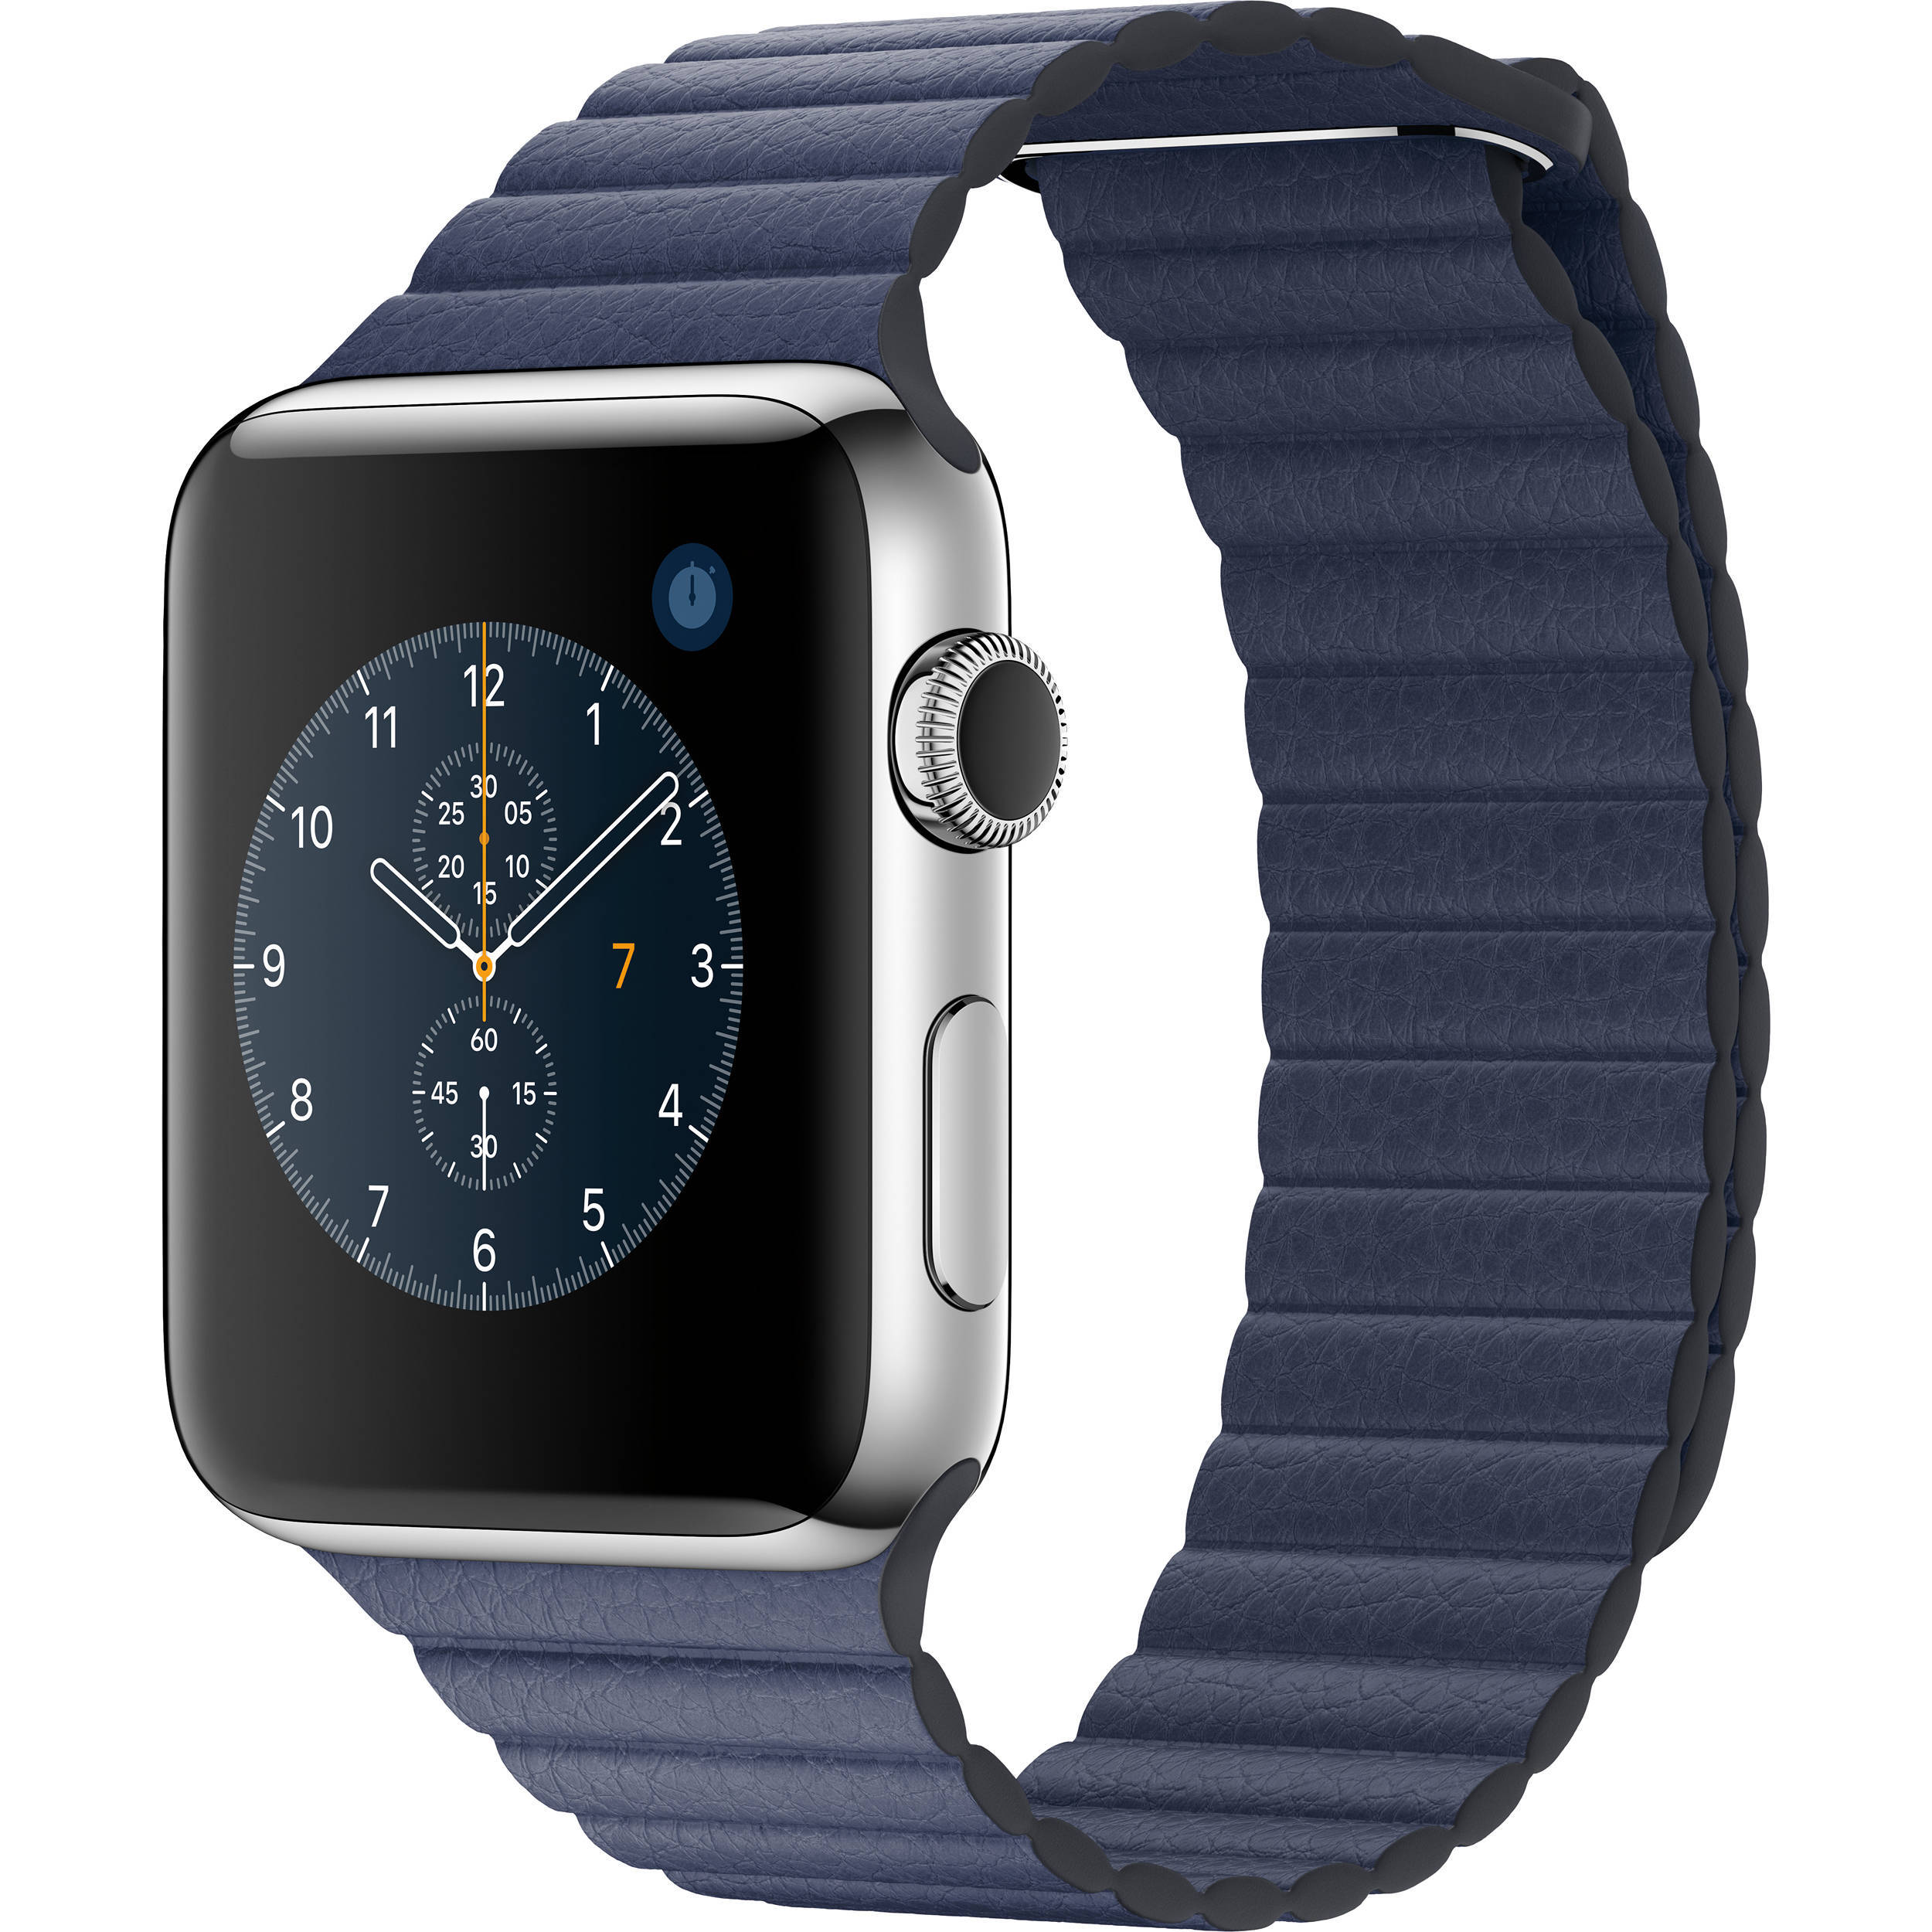 Смарт-часы Apple Watch Series 2 42 MNPX2 St Steel Case with Midnight Blue Leather Loop Band (MNPX2) фото 1